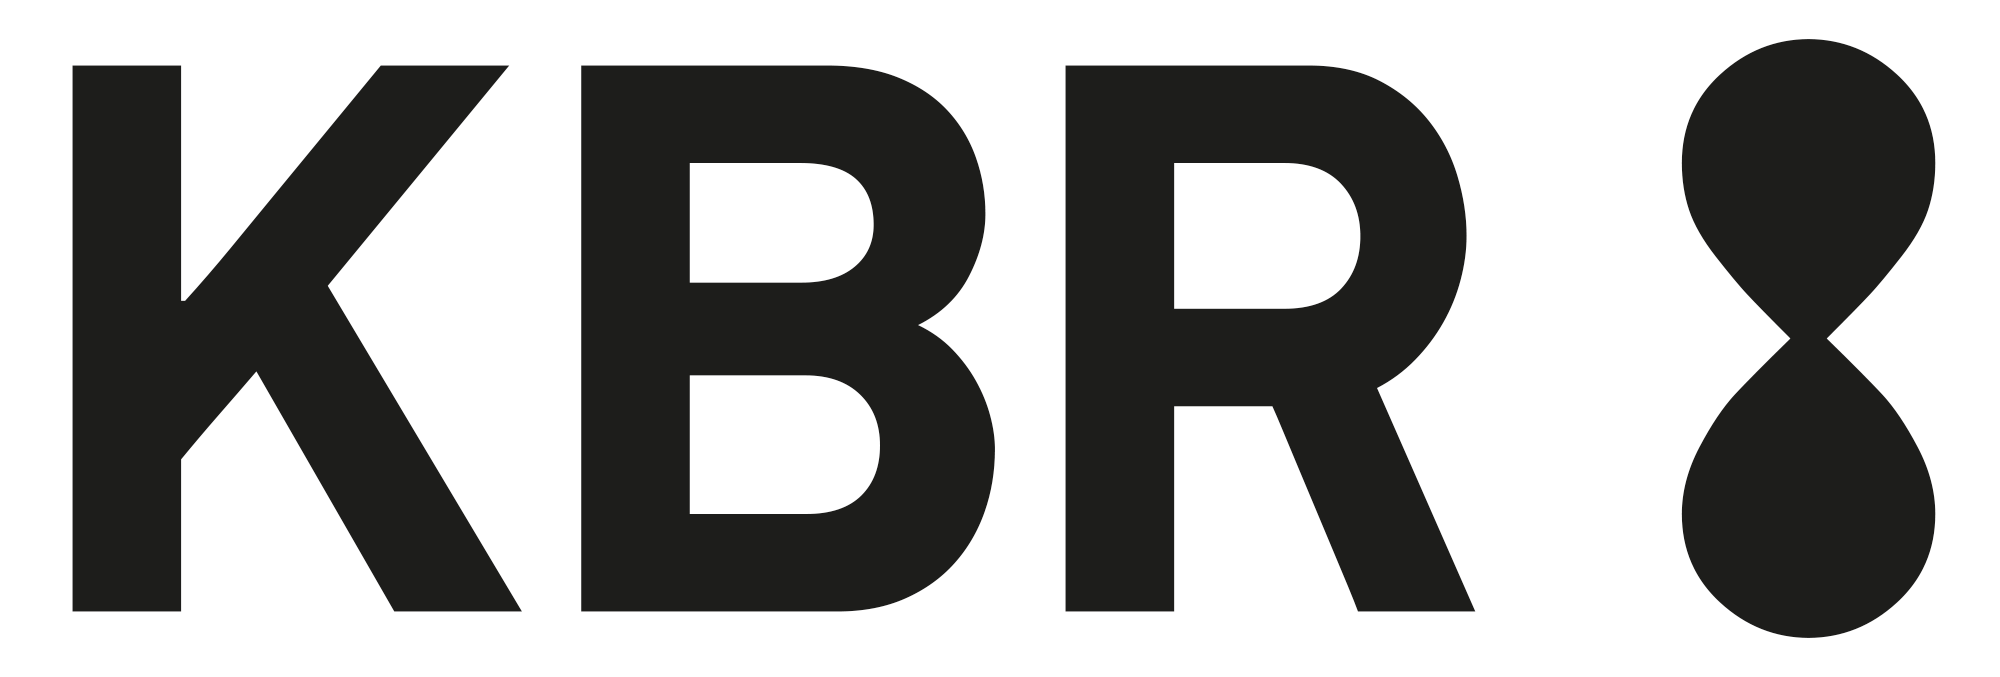 kbr_logo.png